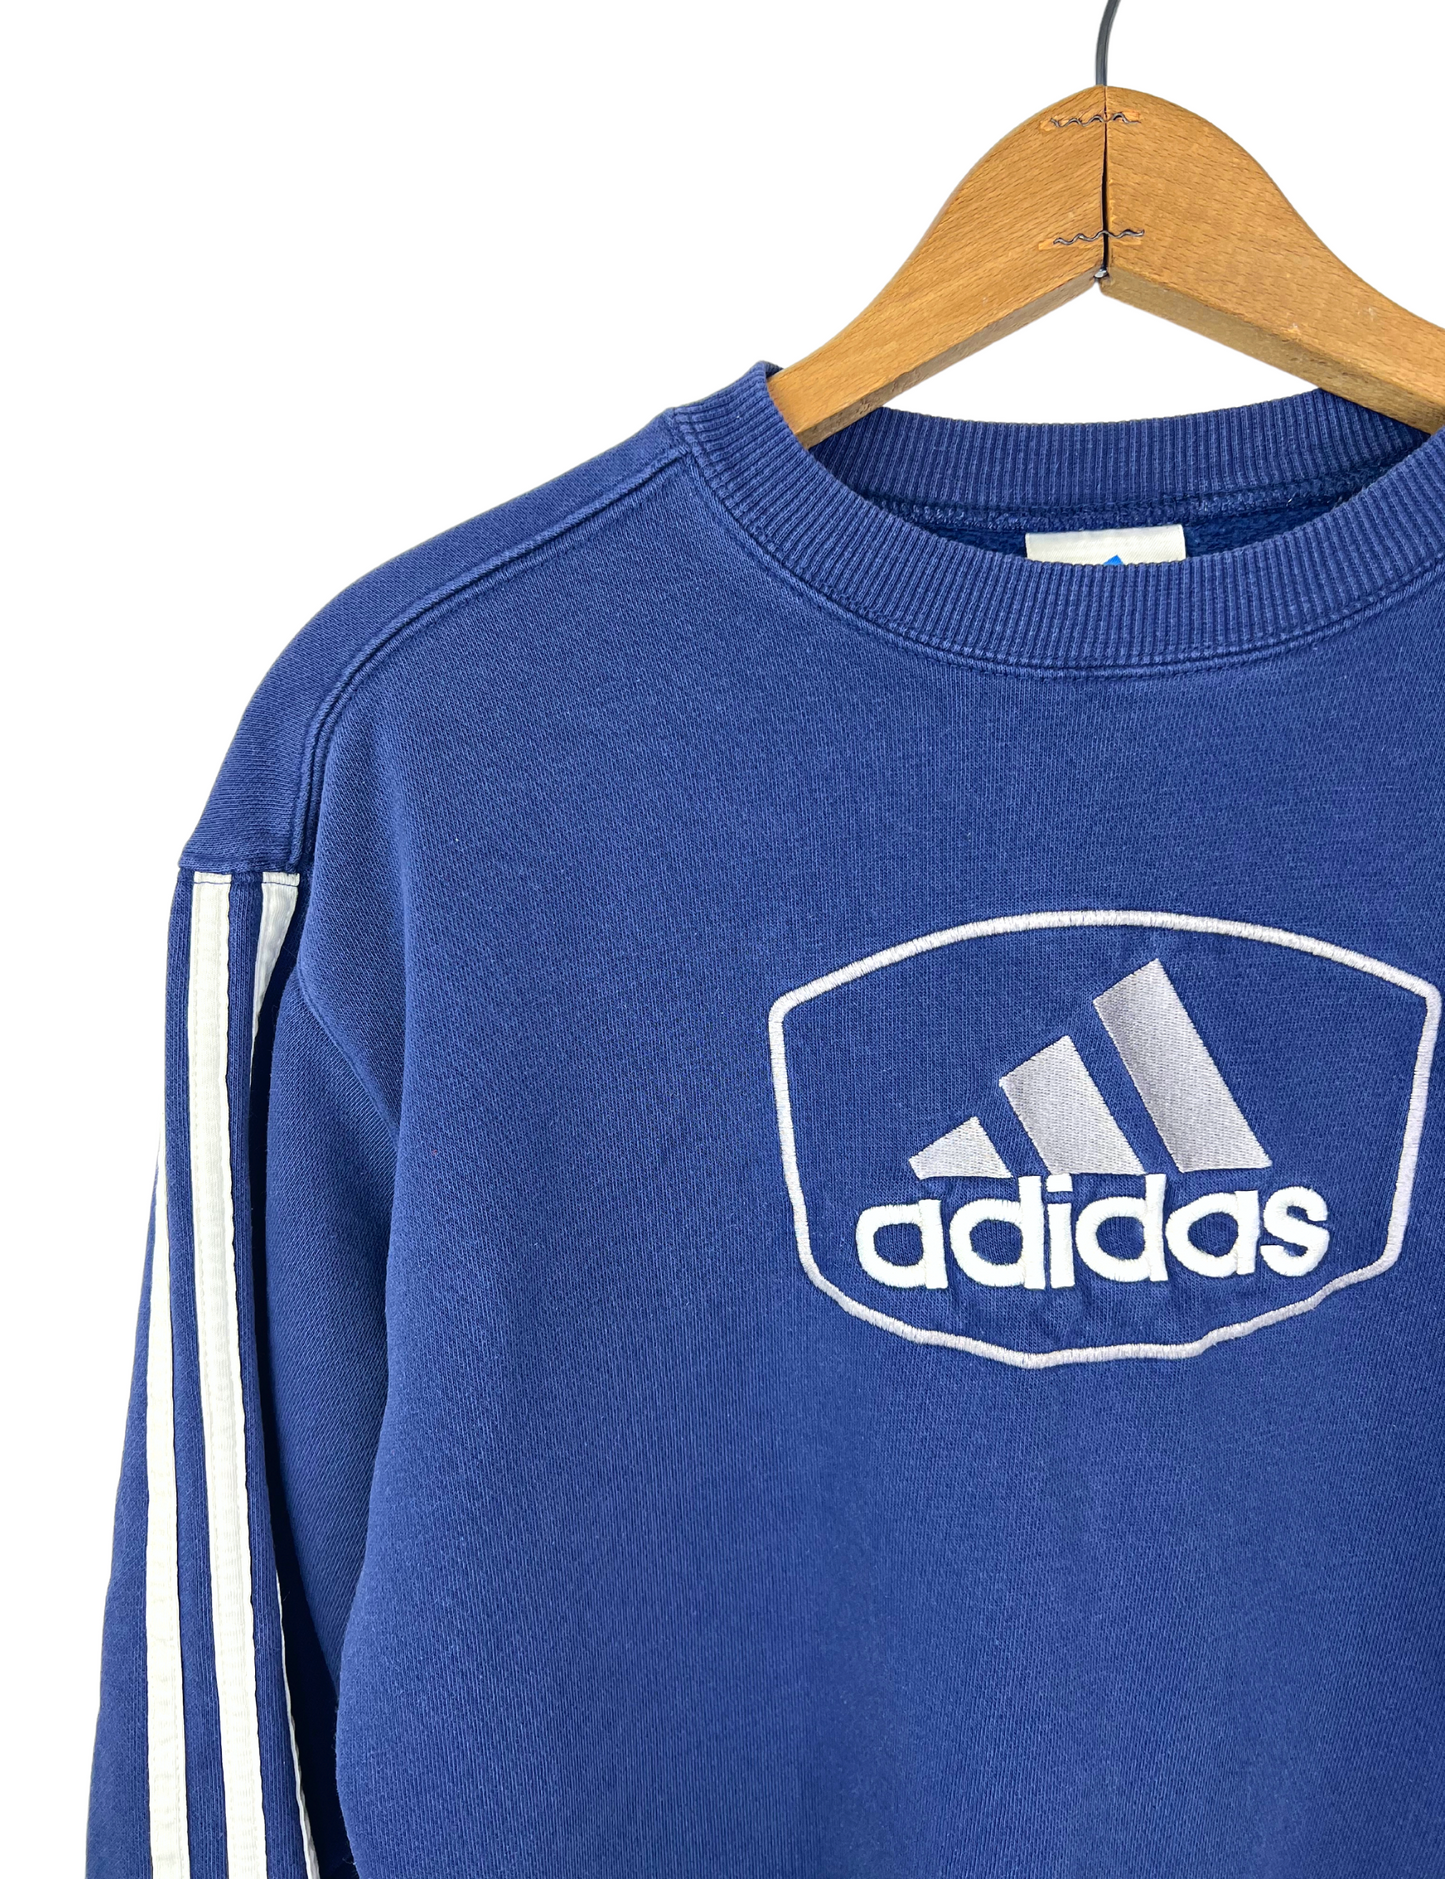 90’s Adidas Trefoil Logo Cropped Sweatshirt